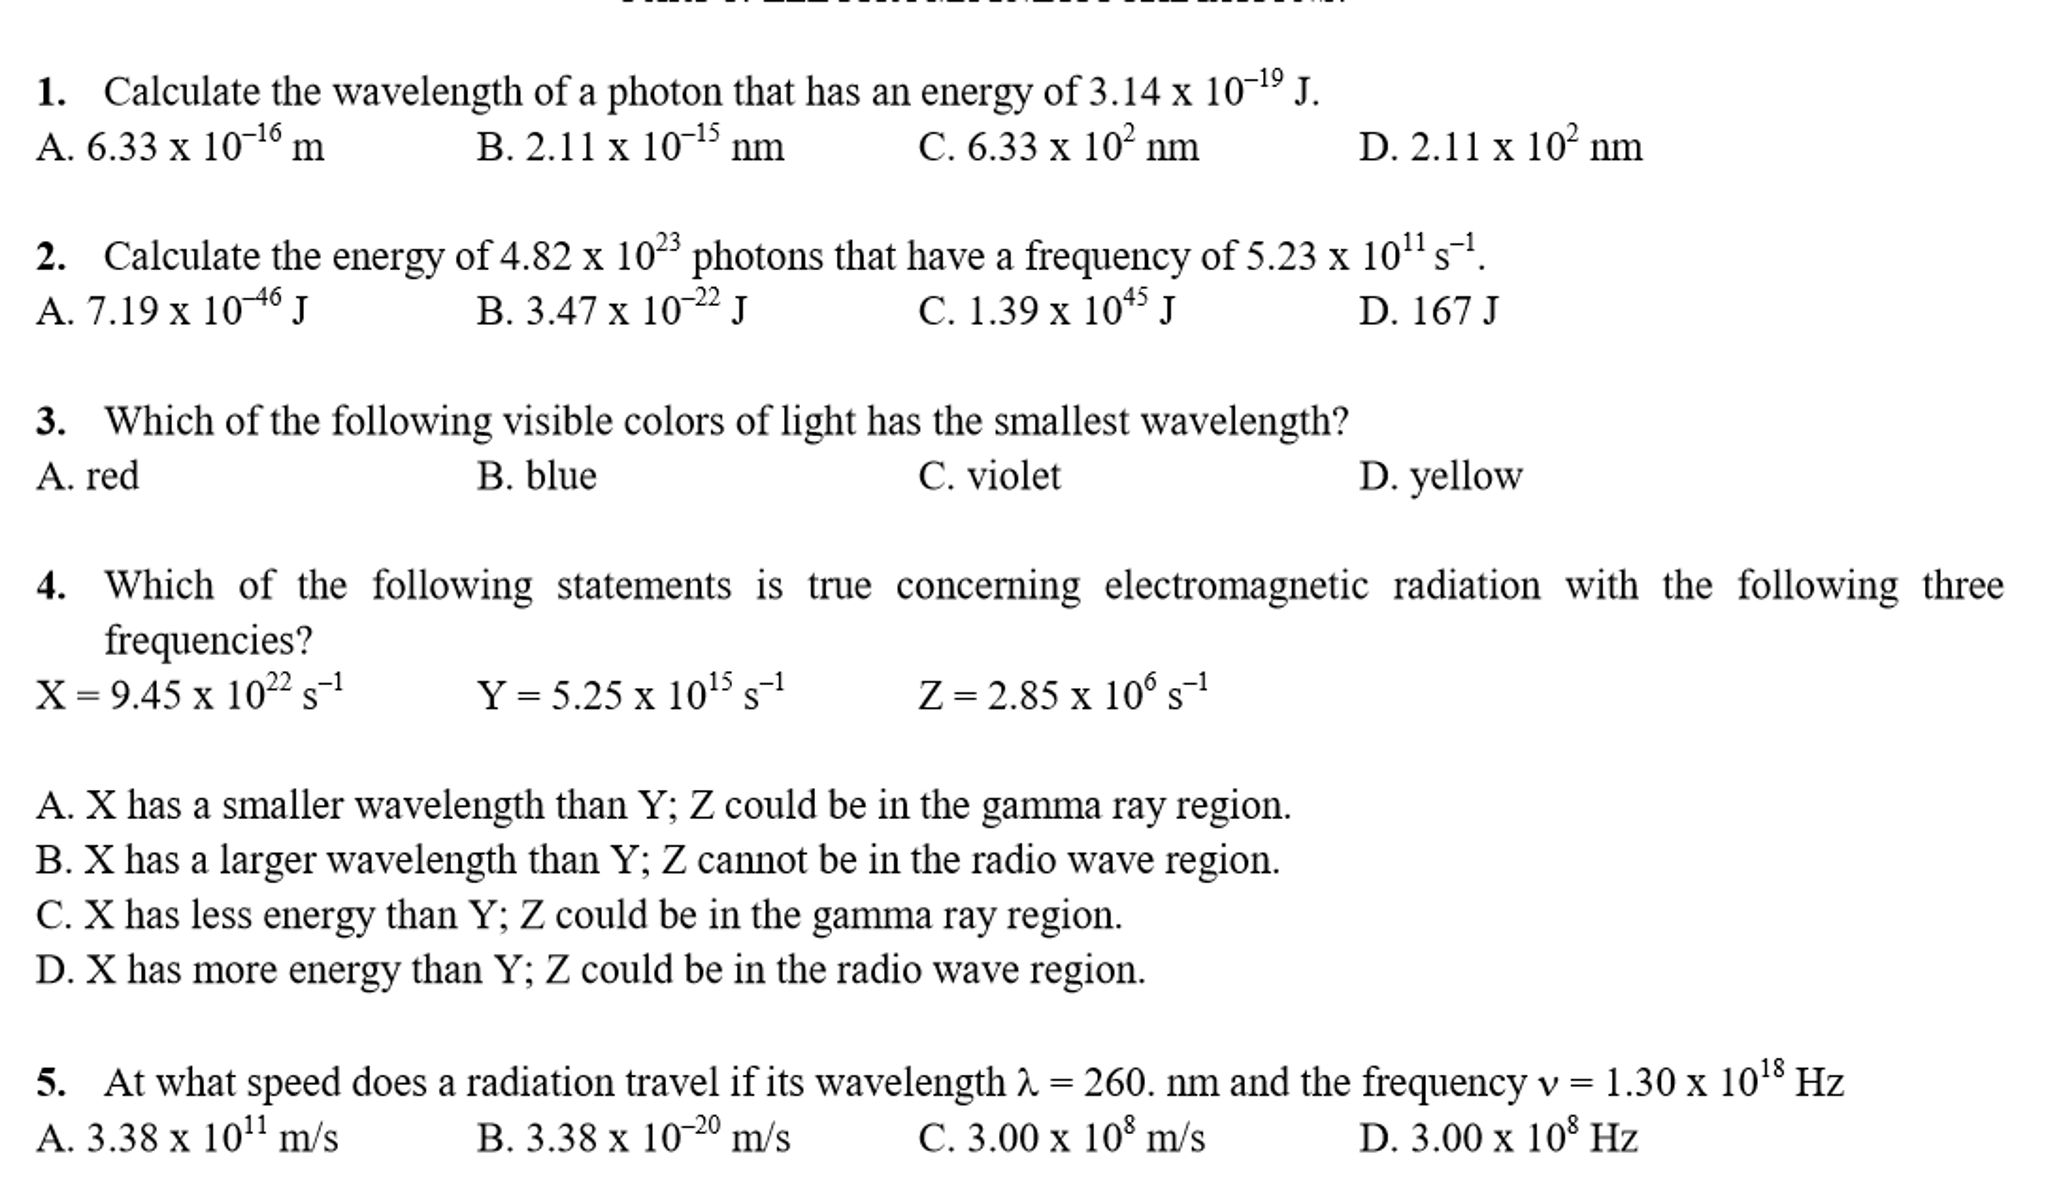 intensity of light equation photons